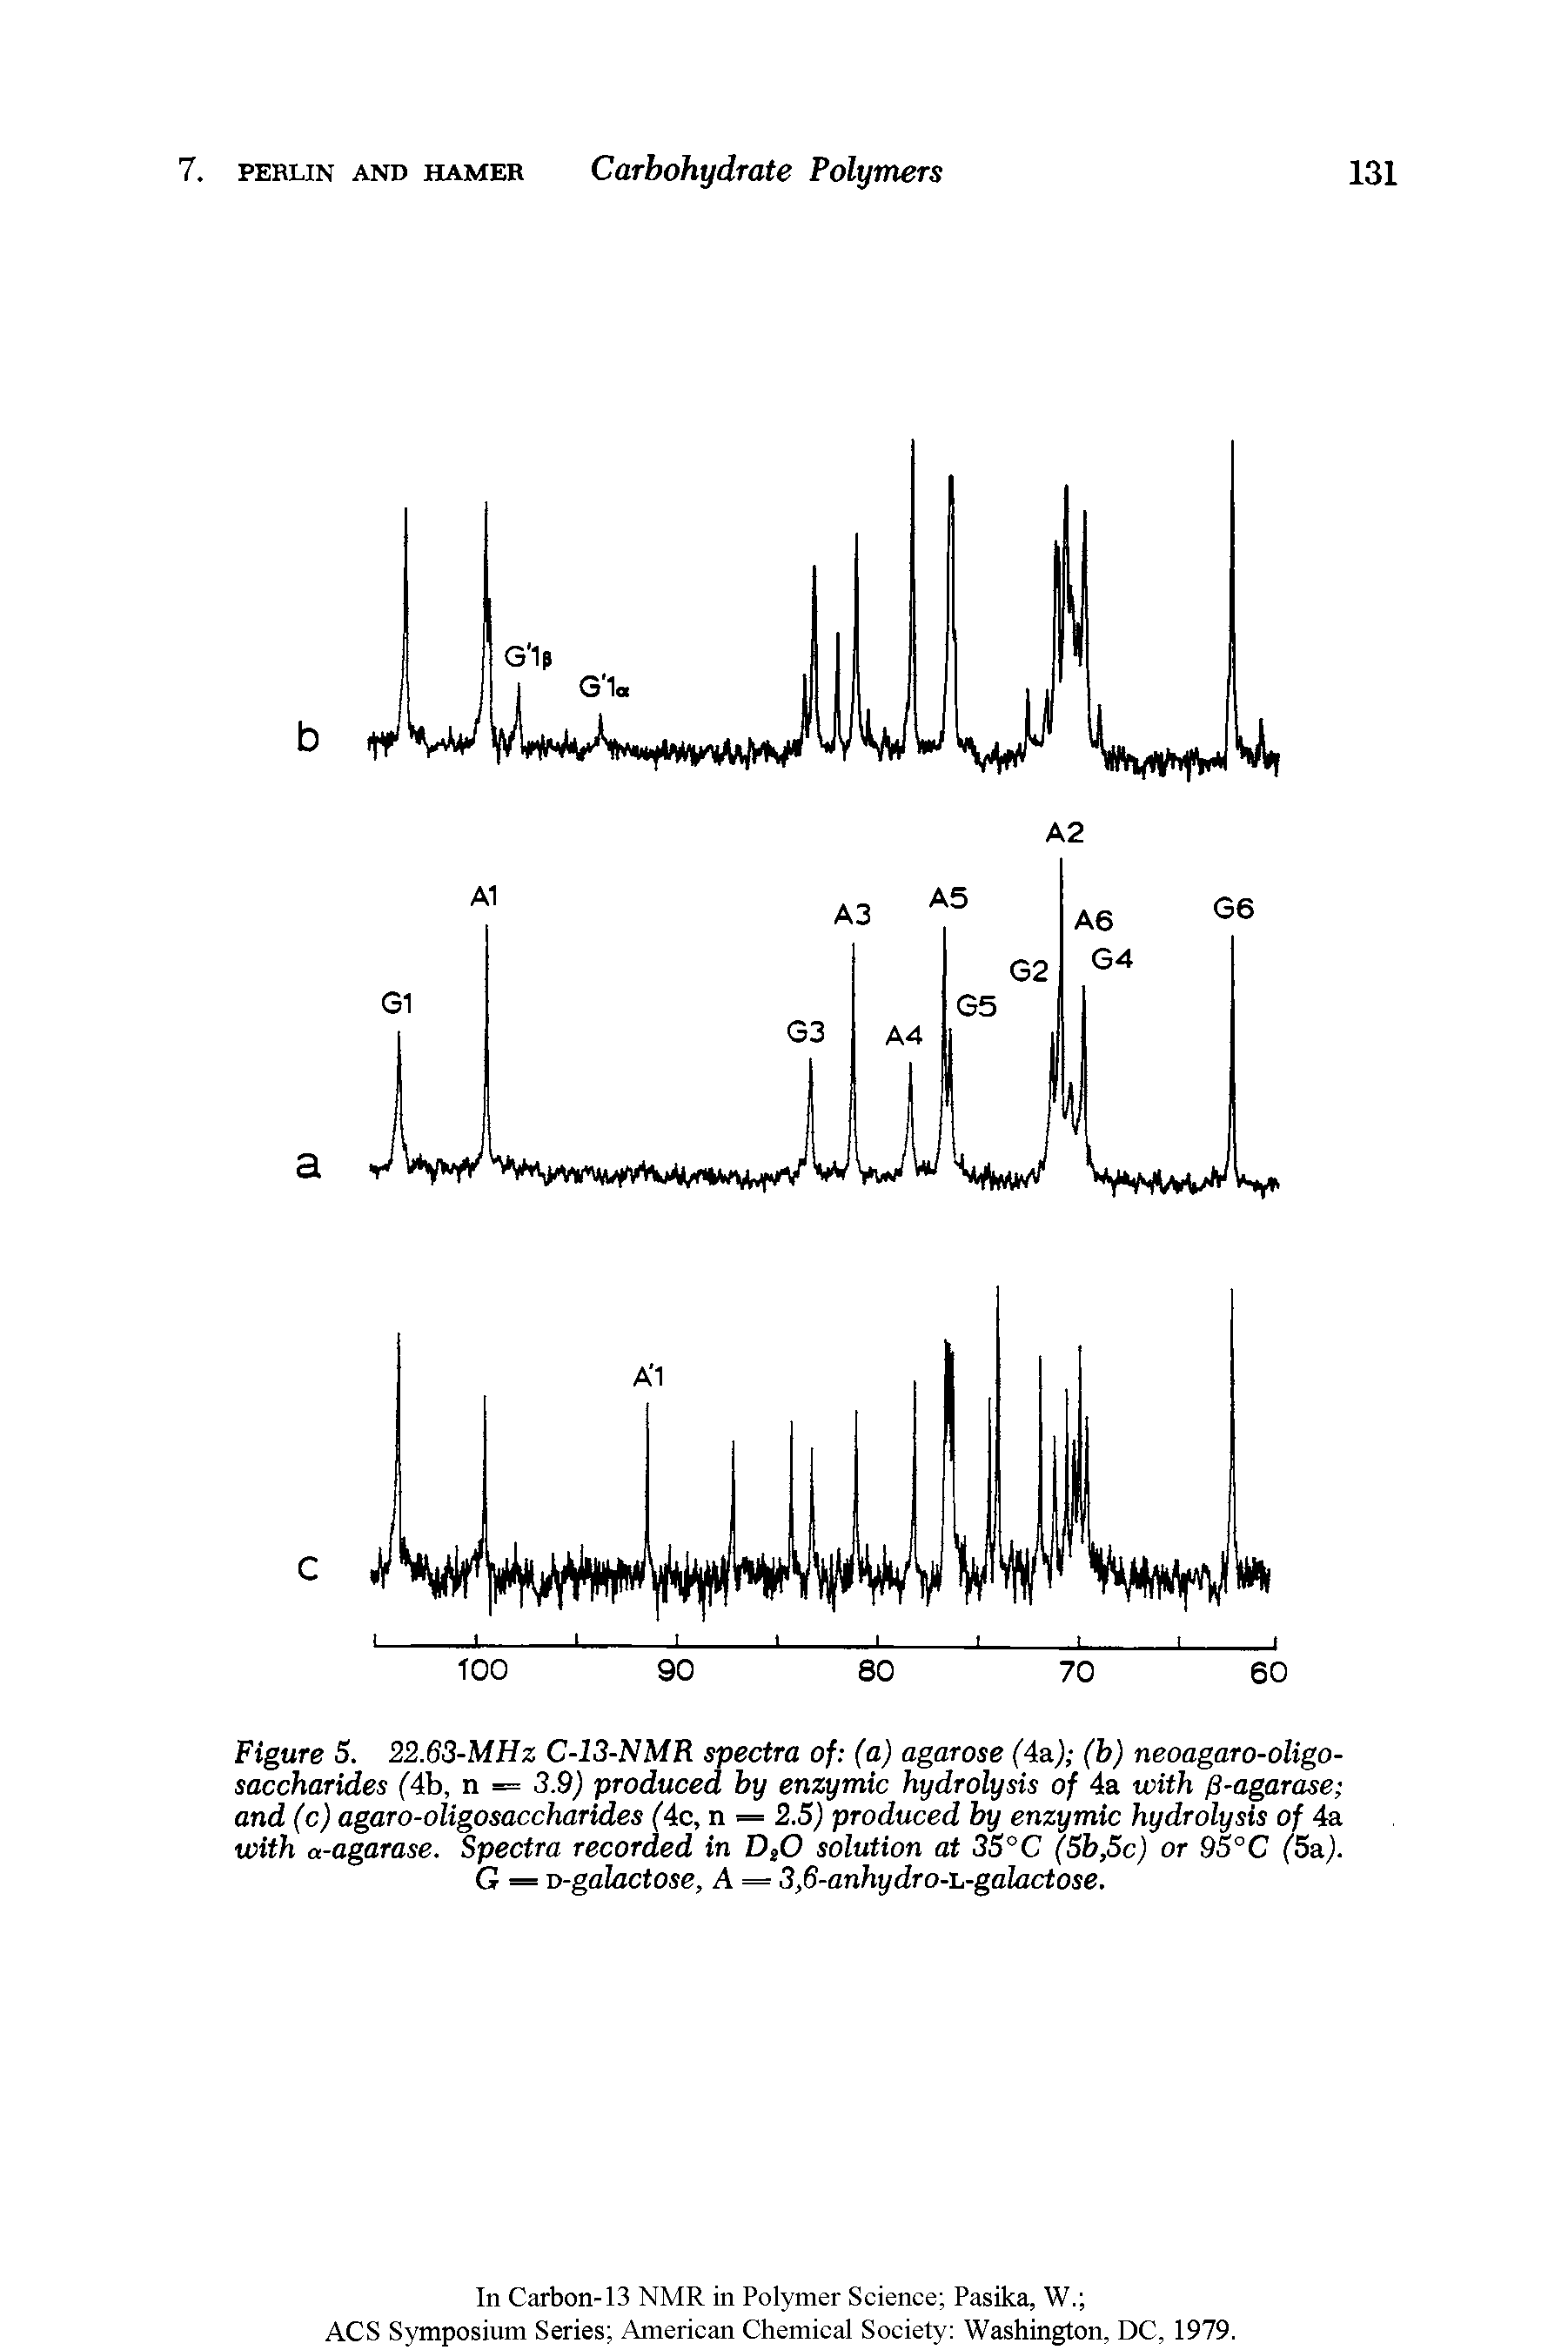 Figure 5. 22.63-MHz C-13-NMR spectra of (a) agarose (4a.) (b) neoagaro-oligo-saccharides ("lb, n = 3.9) produced by enzymic hydrolysis of 4a with p-agarase and (c) agaro-oligosaccharides ( 4c, n = 2.5) produced by enzymic hydrolysis of 4a with u-agarase. Spectra recorded in DgO solution at 33°C (3b,5c) or 93°C (5a). G = D-galactose, A = 3,6-anhydro-h-galactose.